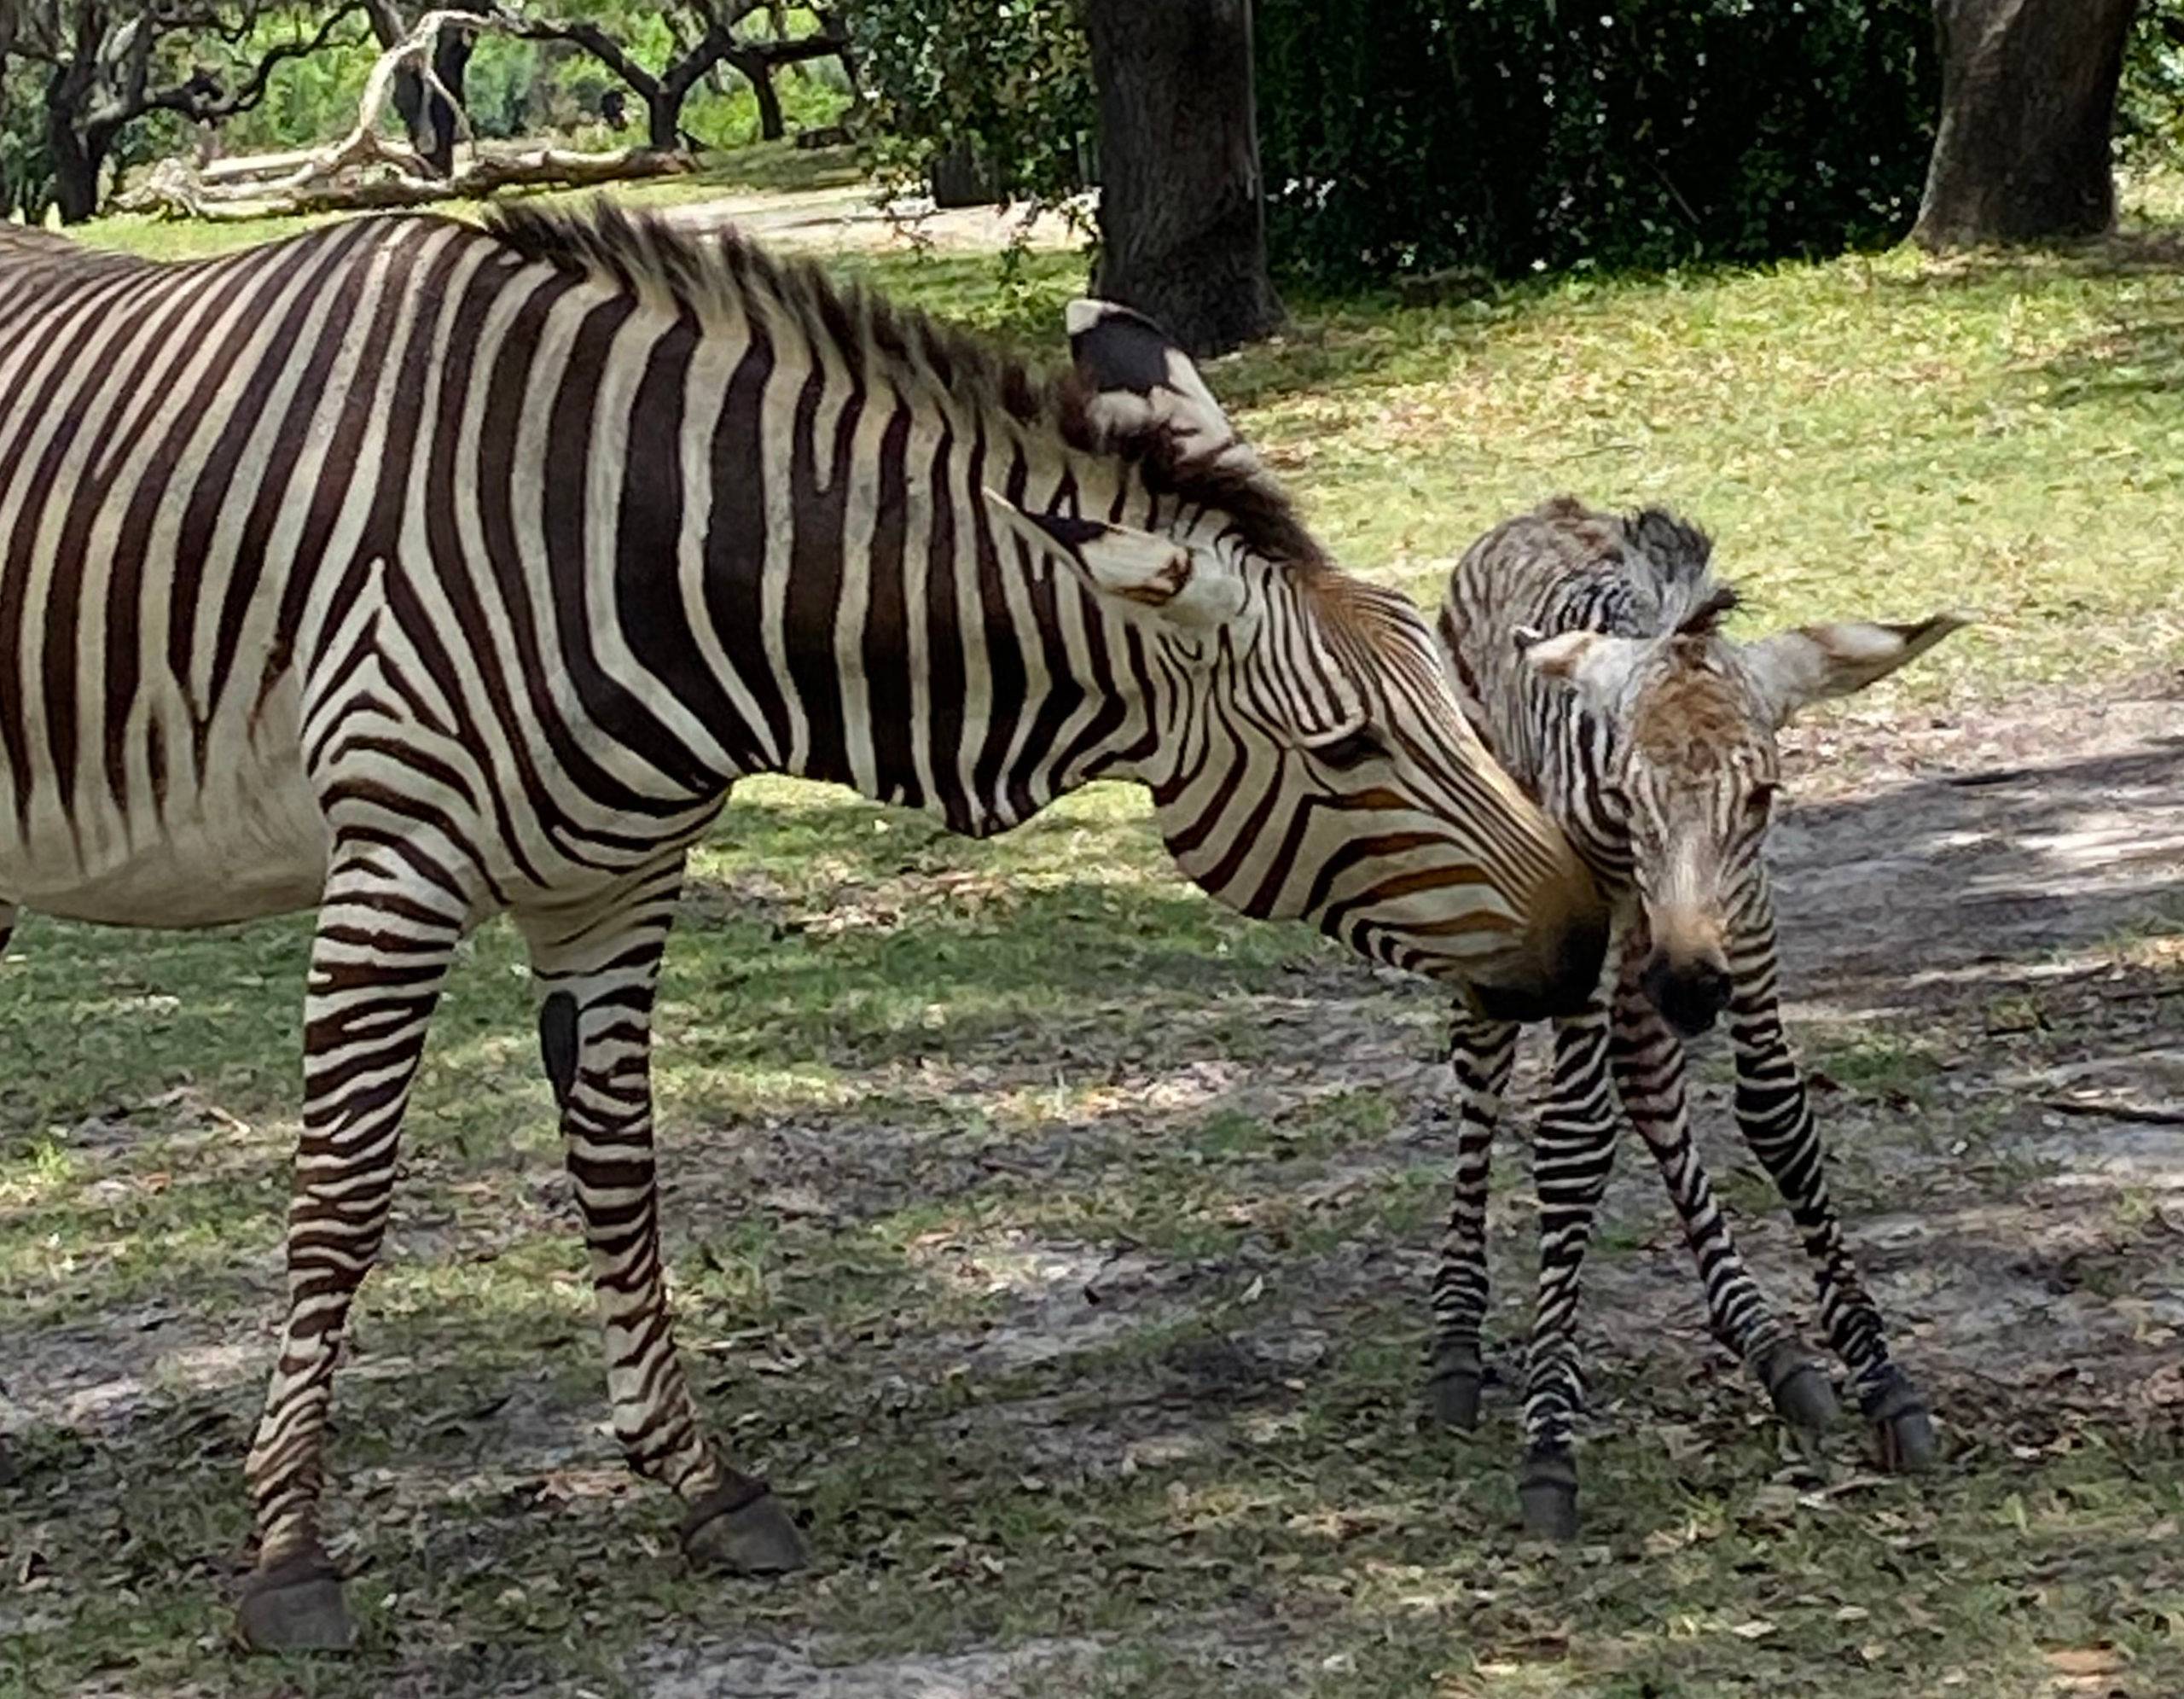 Disney's Animal Kingdom welcomes a new Hartmann's Mountain zebra foal to the herd at Kilimanjaro Safaris